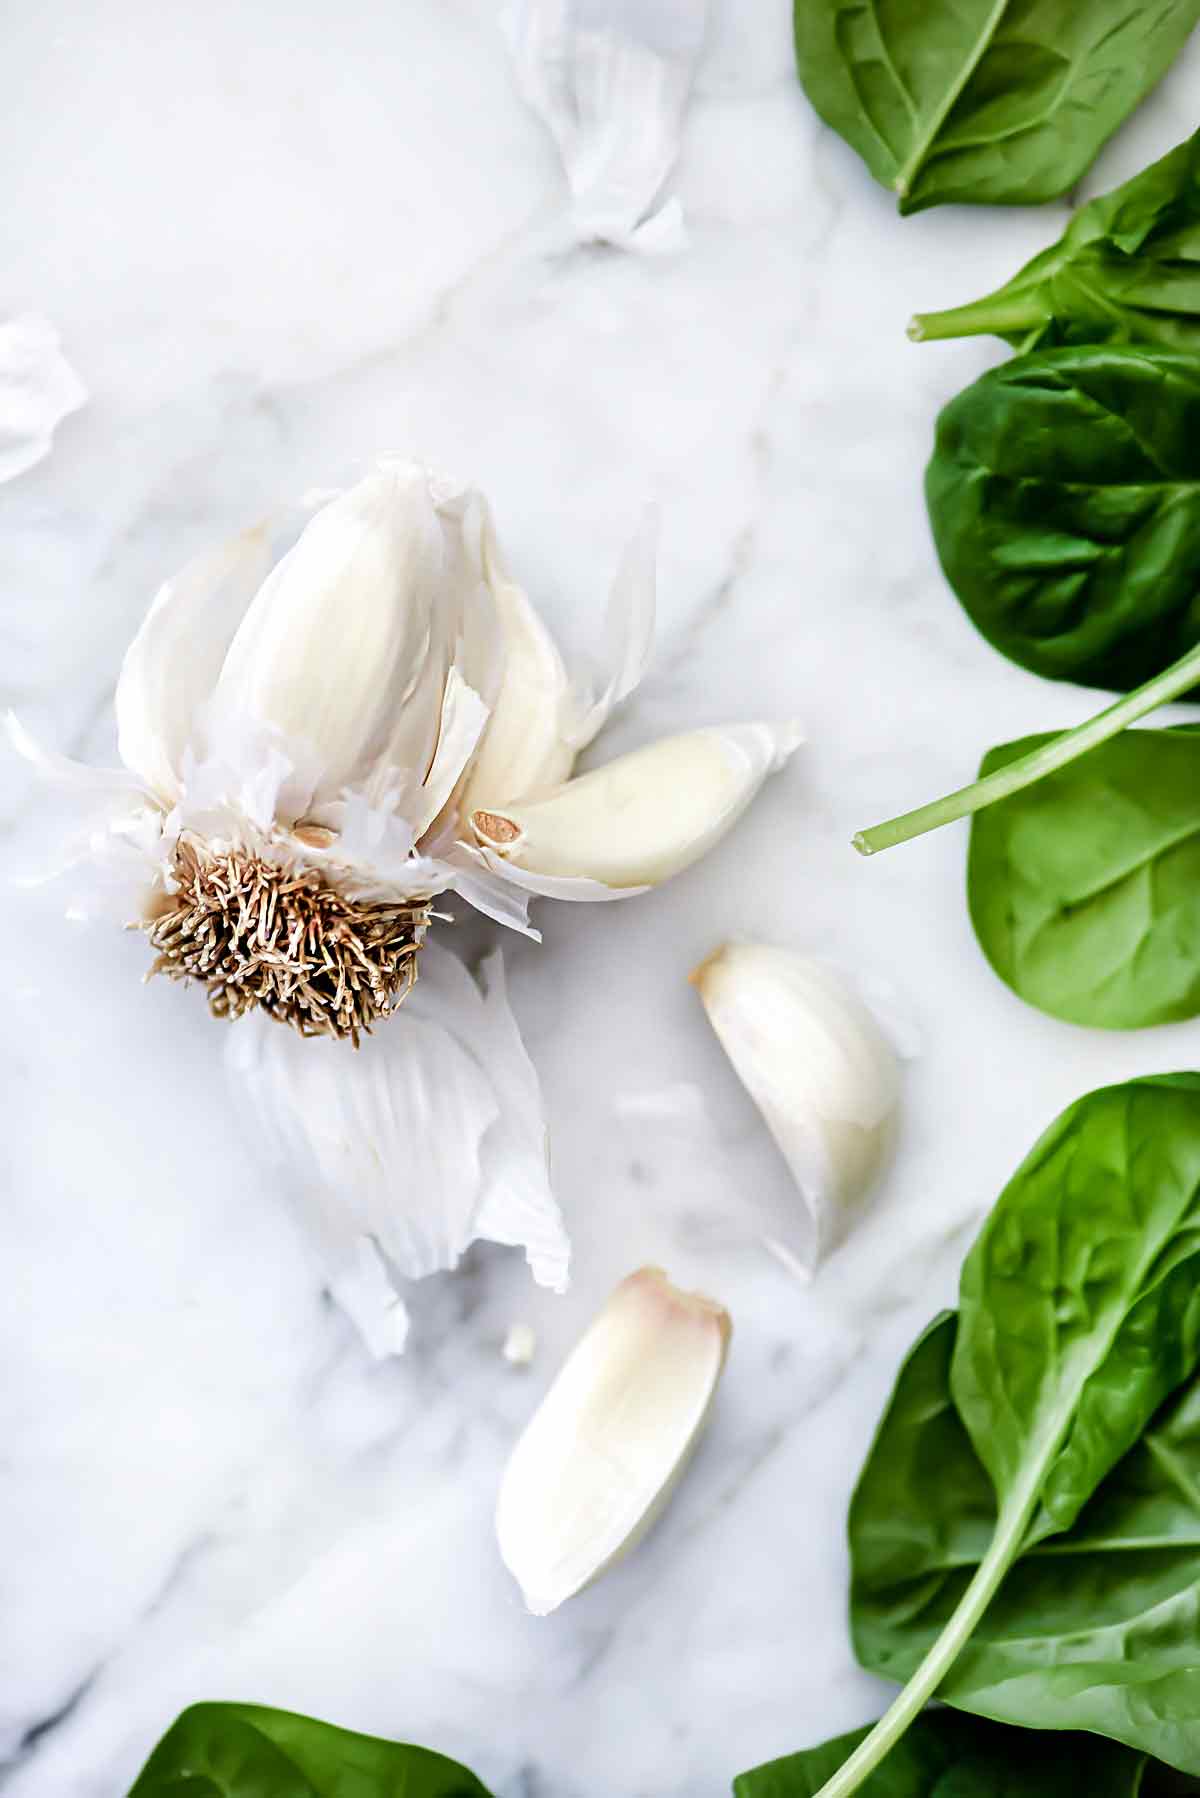 Spinach sautéed with garlic foodiecrush.com #recipes #sidedish #saute #spinach #garlic #healthy